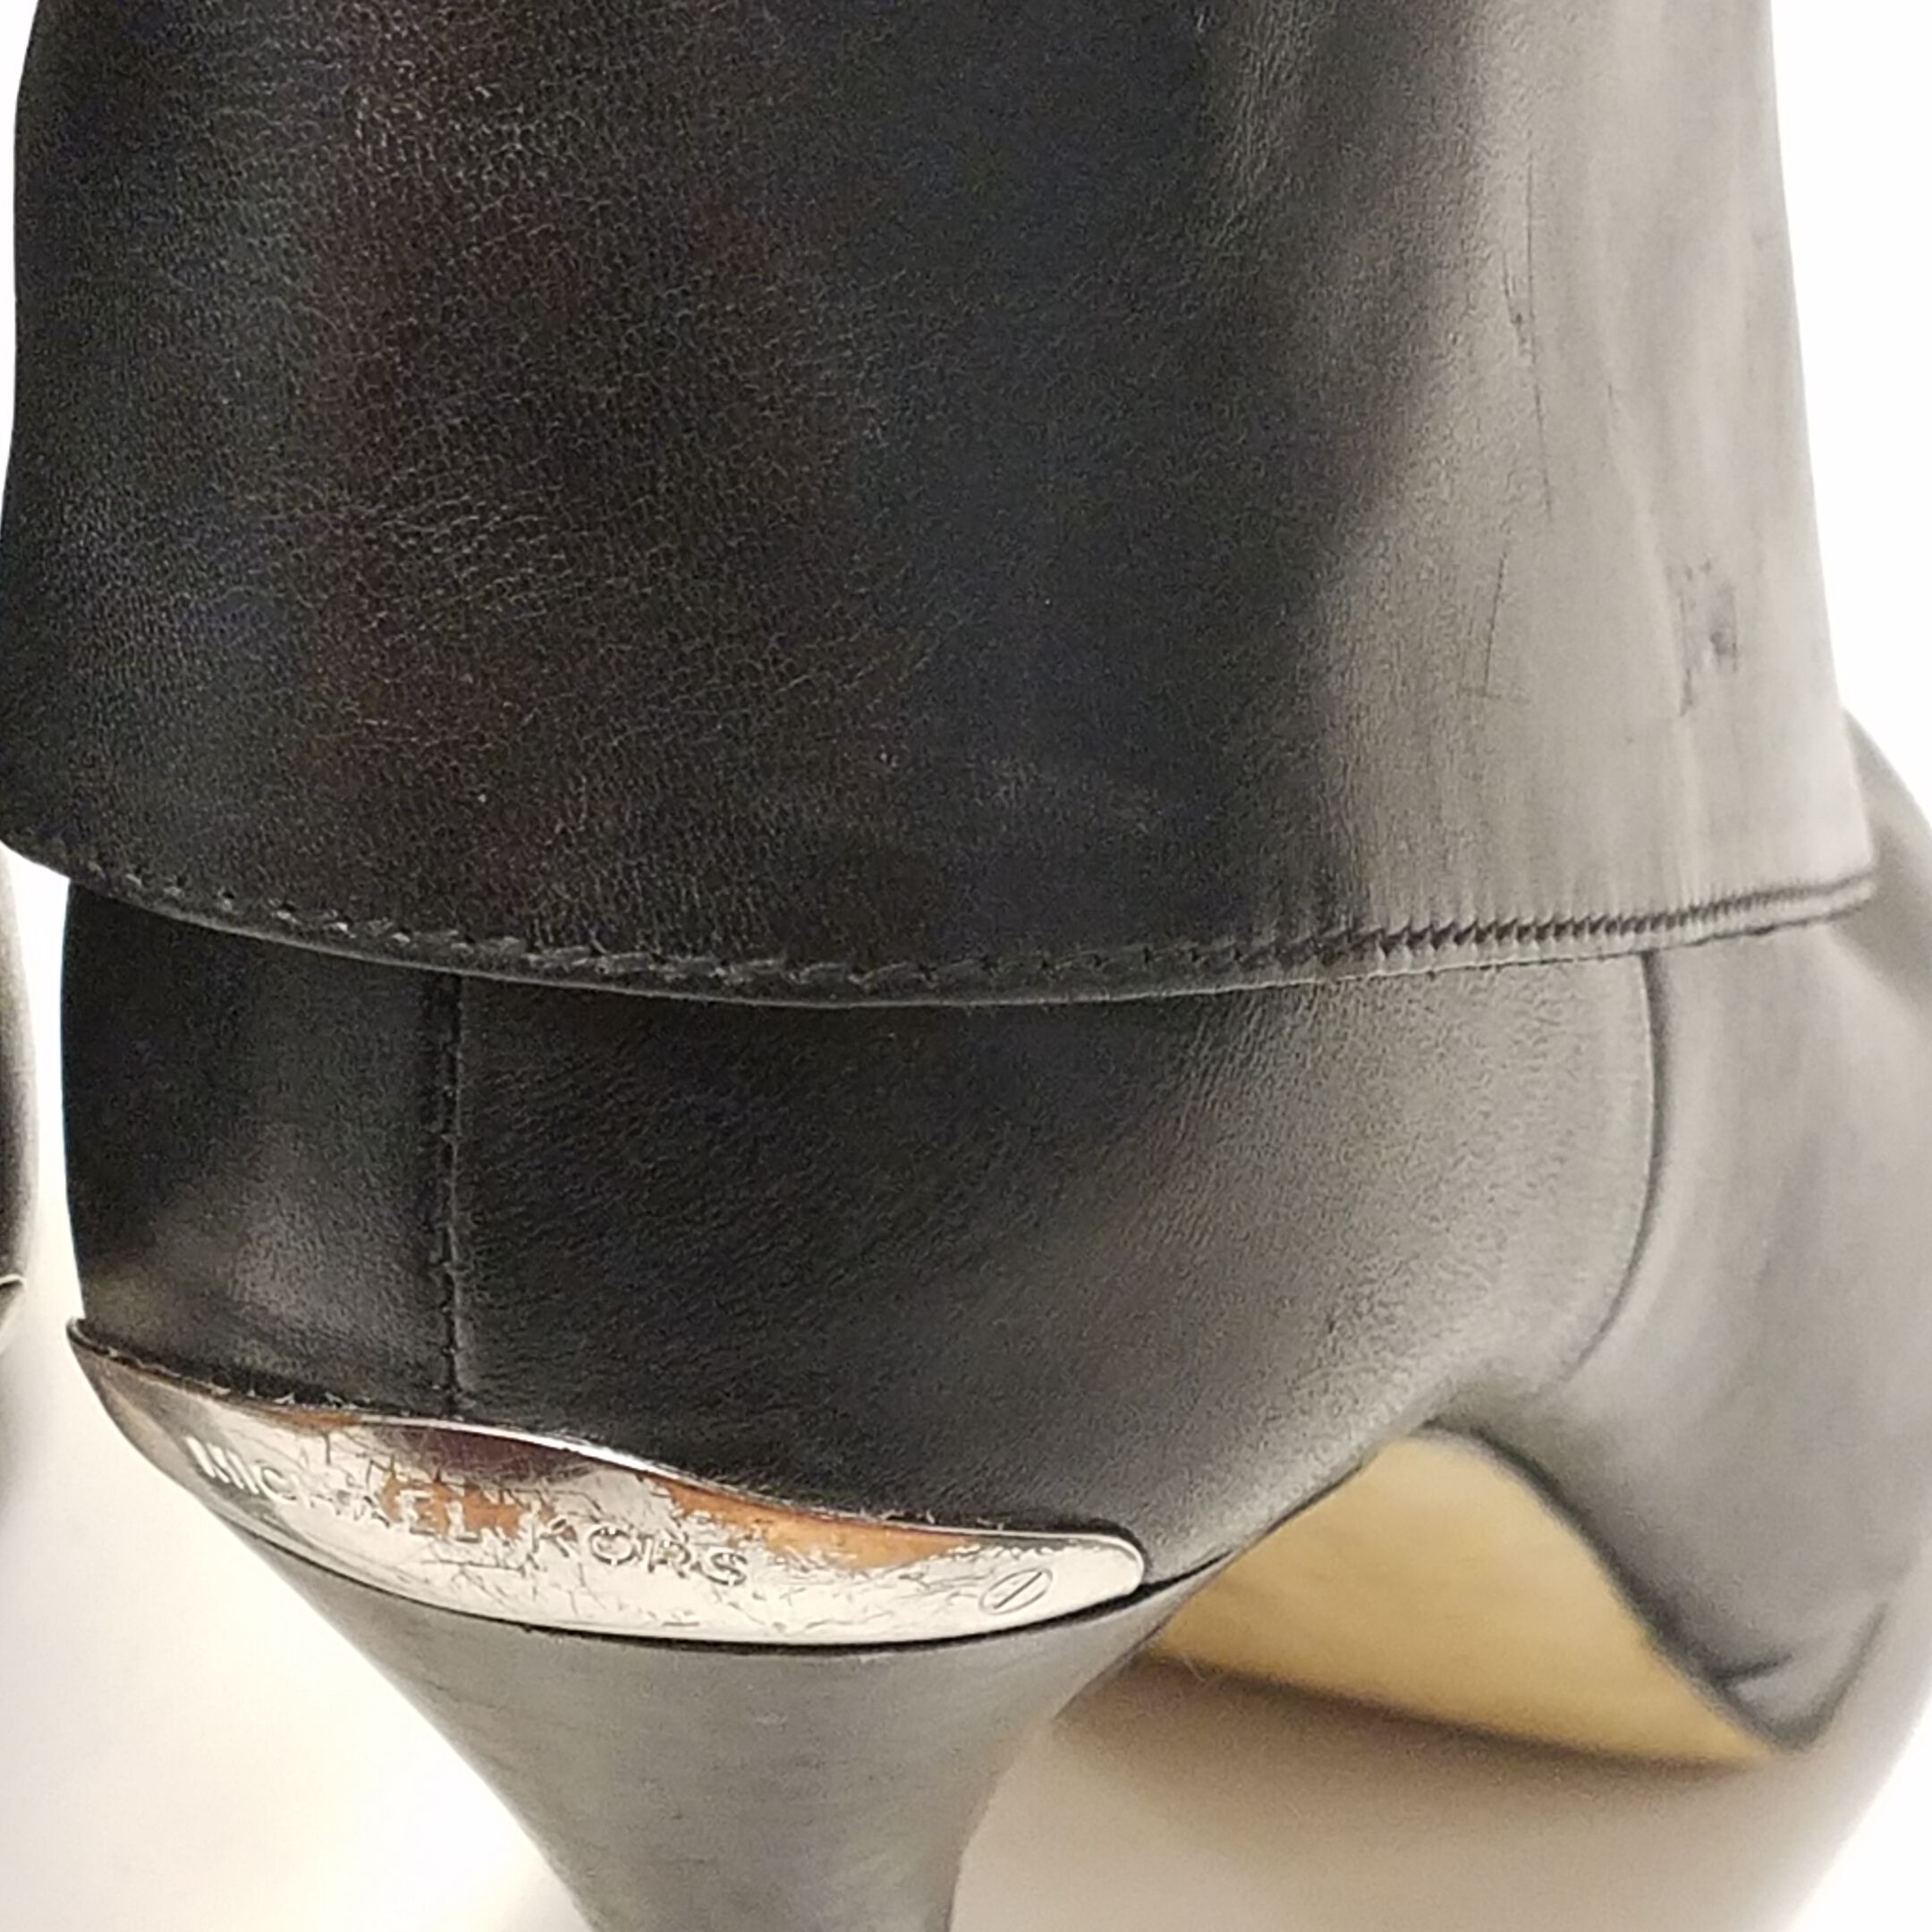 Michael Kors | Shoes | Michael Kors Hamilton Black Patent Leather Pumps  Size | Poshmark